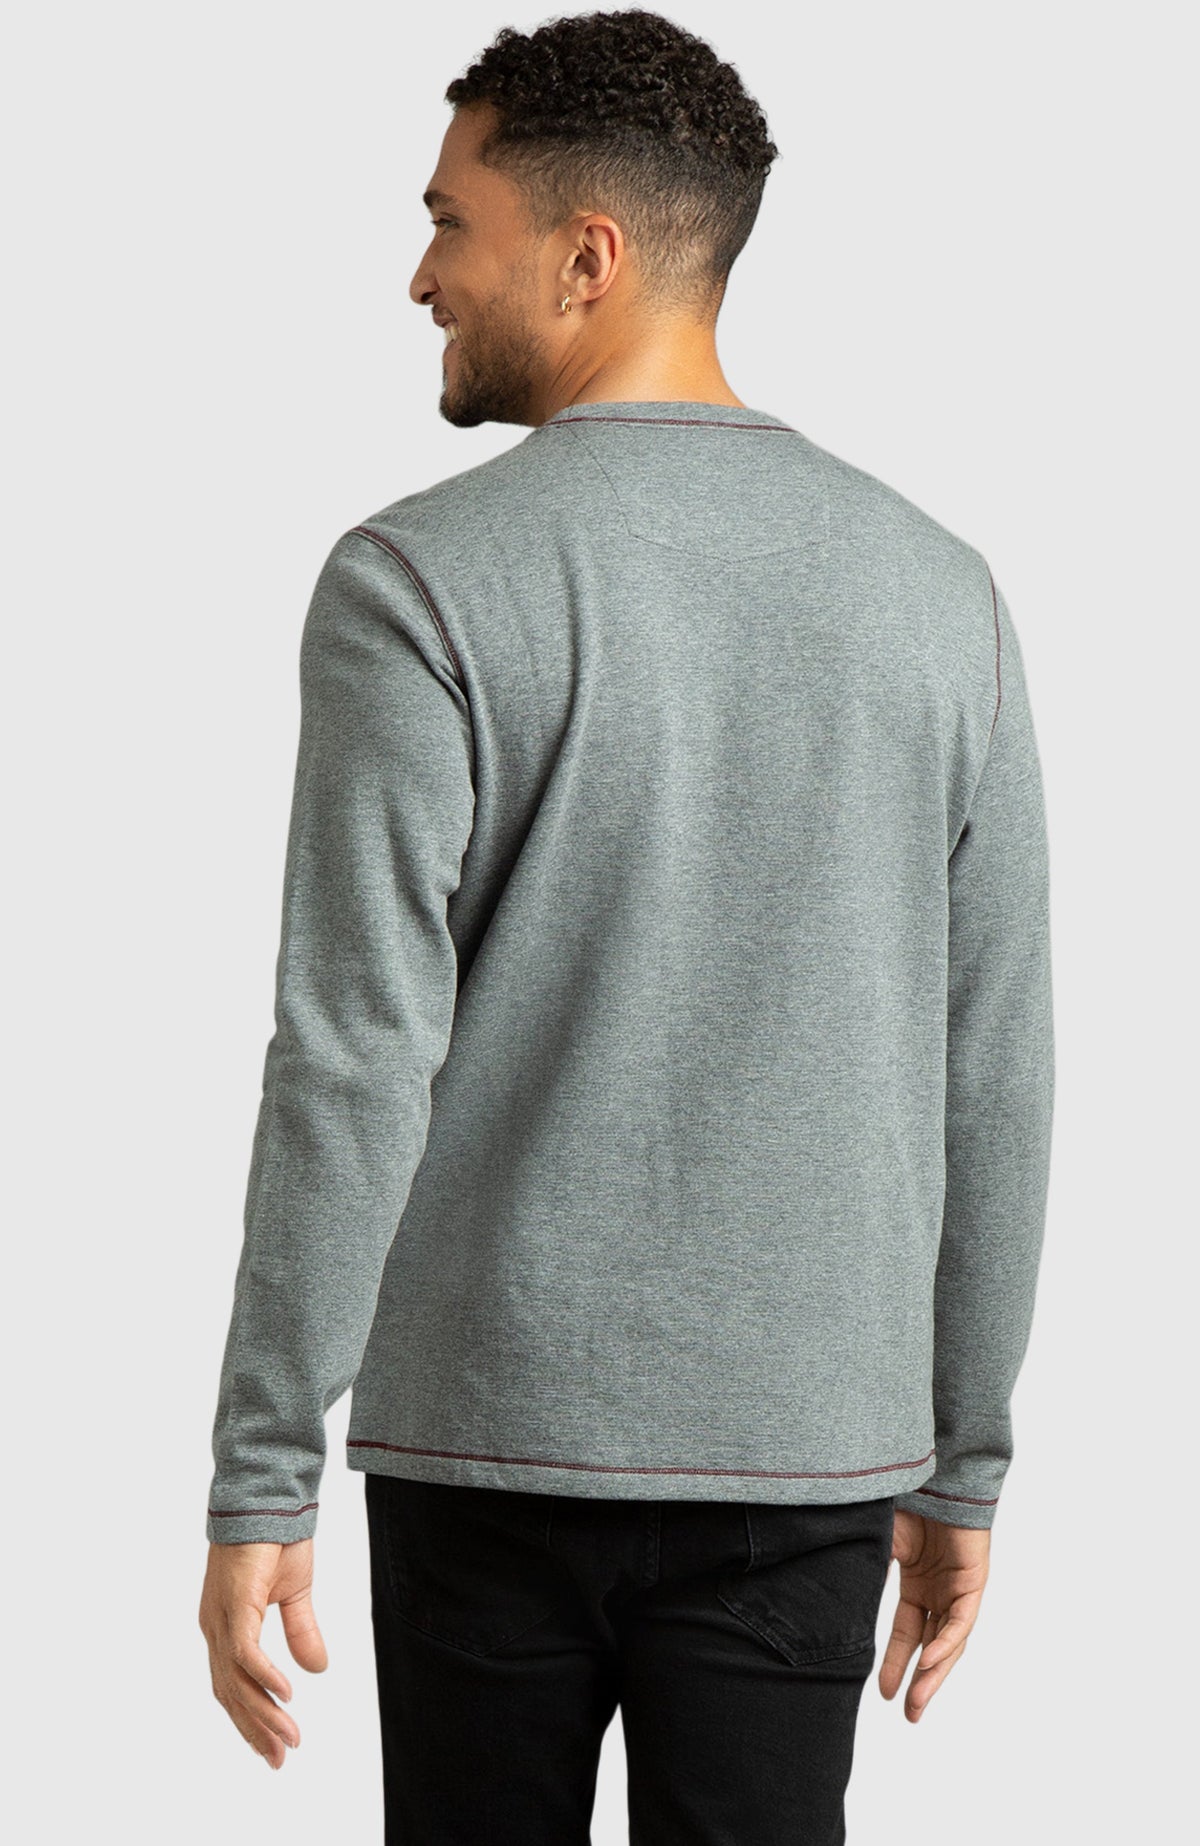 Heather Grey Double Knit Crewneck Sweatshirt for Men - Back